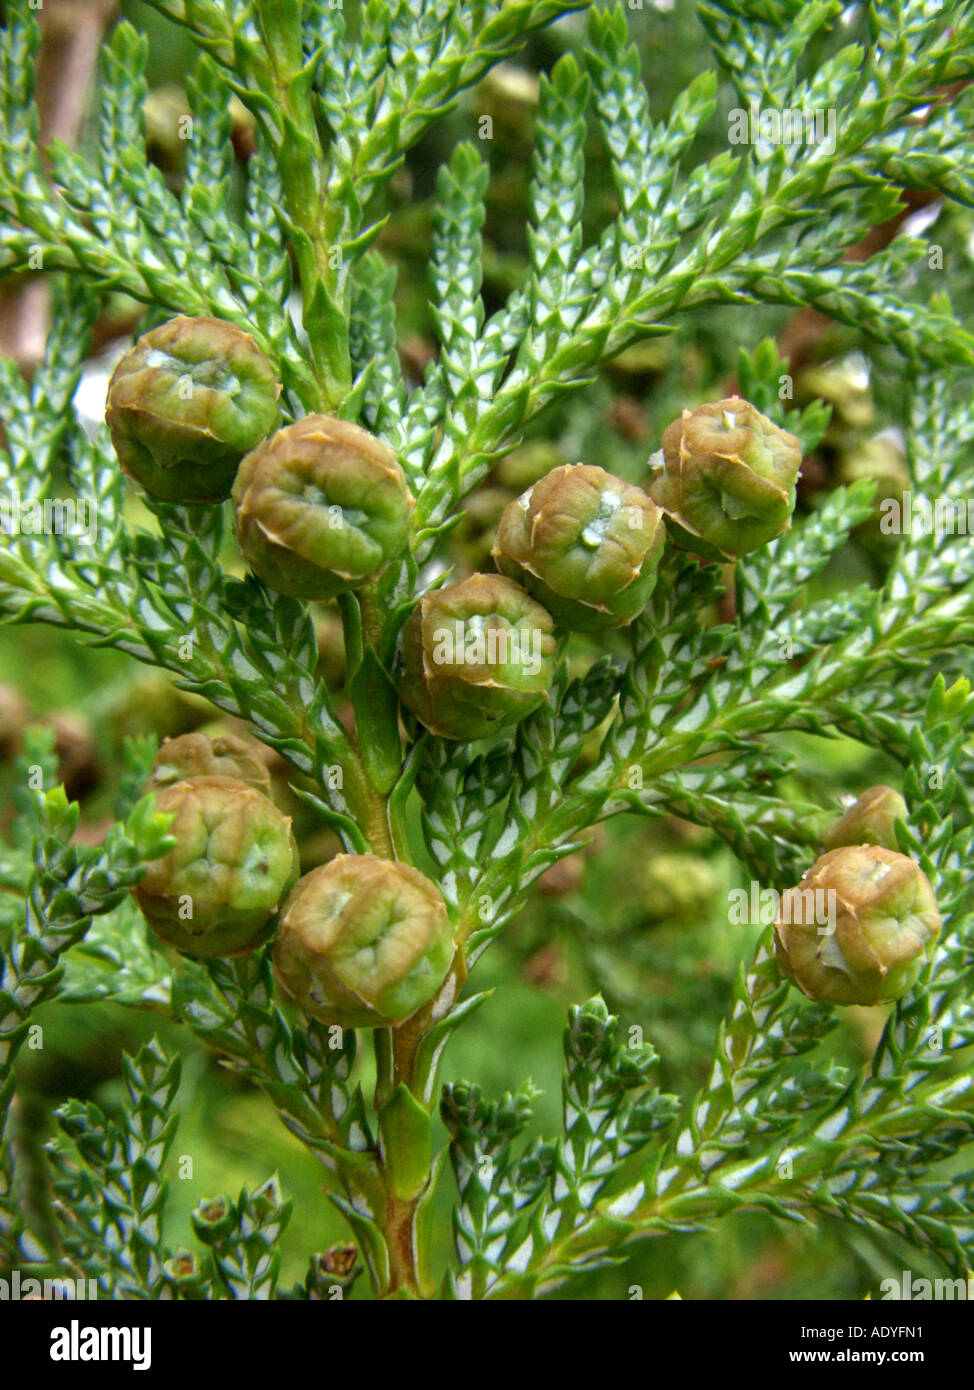 sawara falsecypress (Chamaecyparis pisifera), twig with young cones Stock Photo